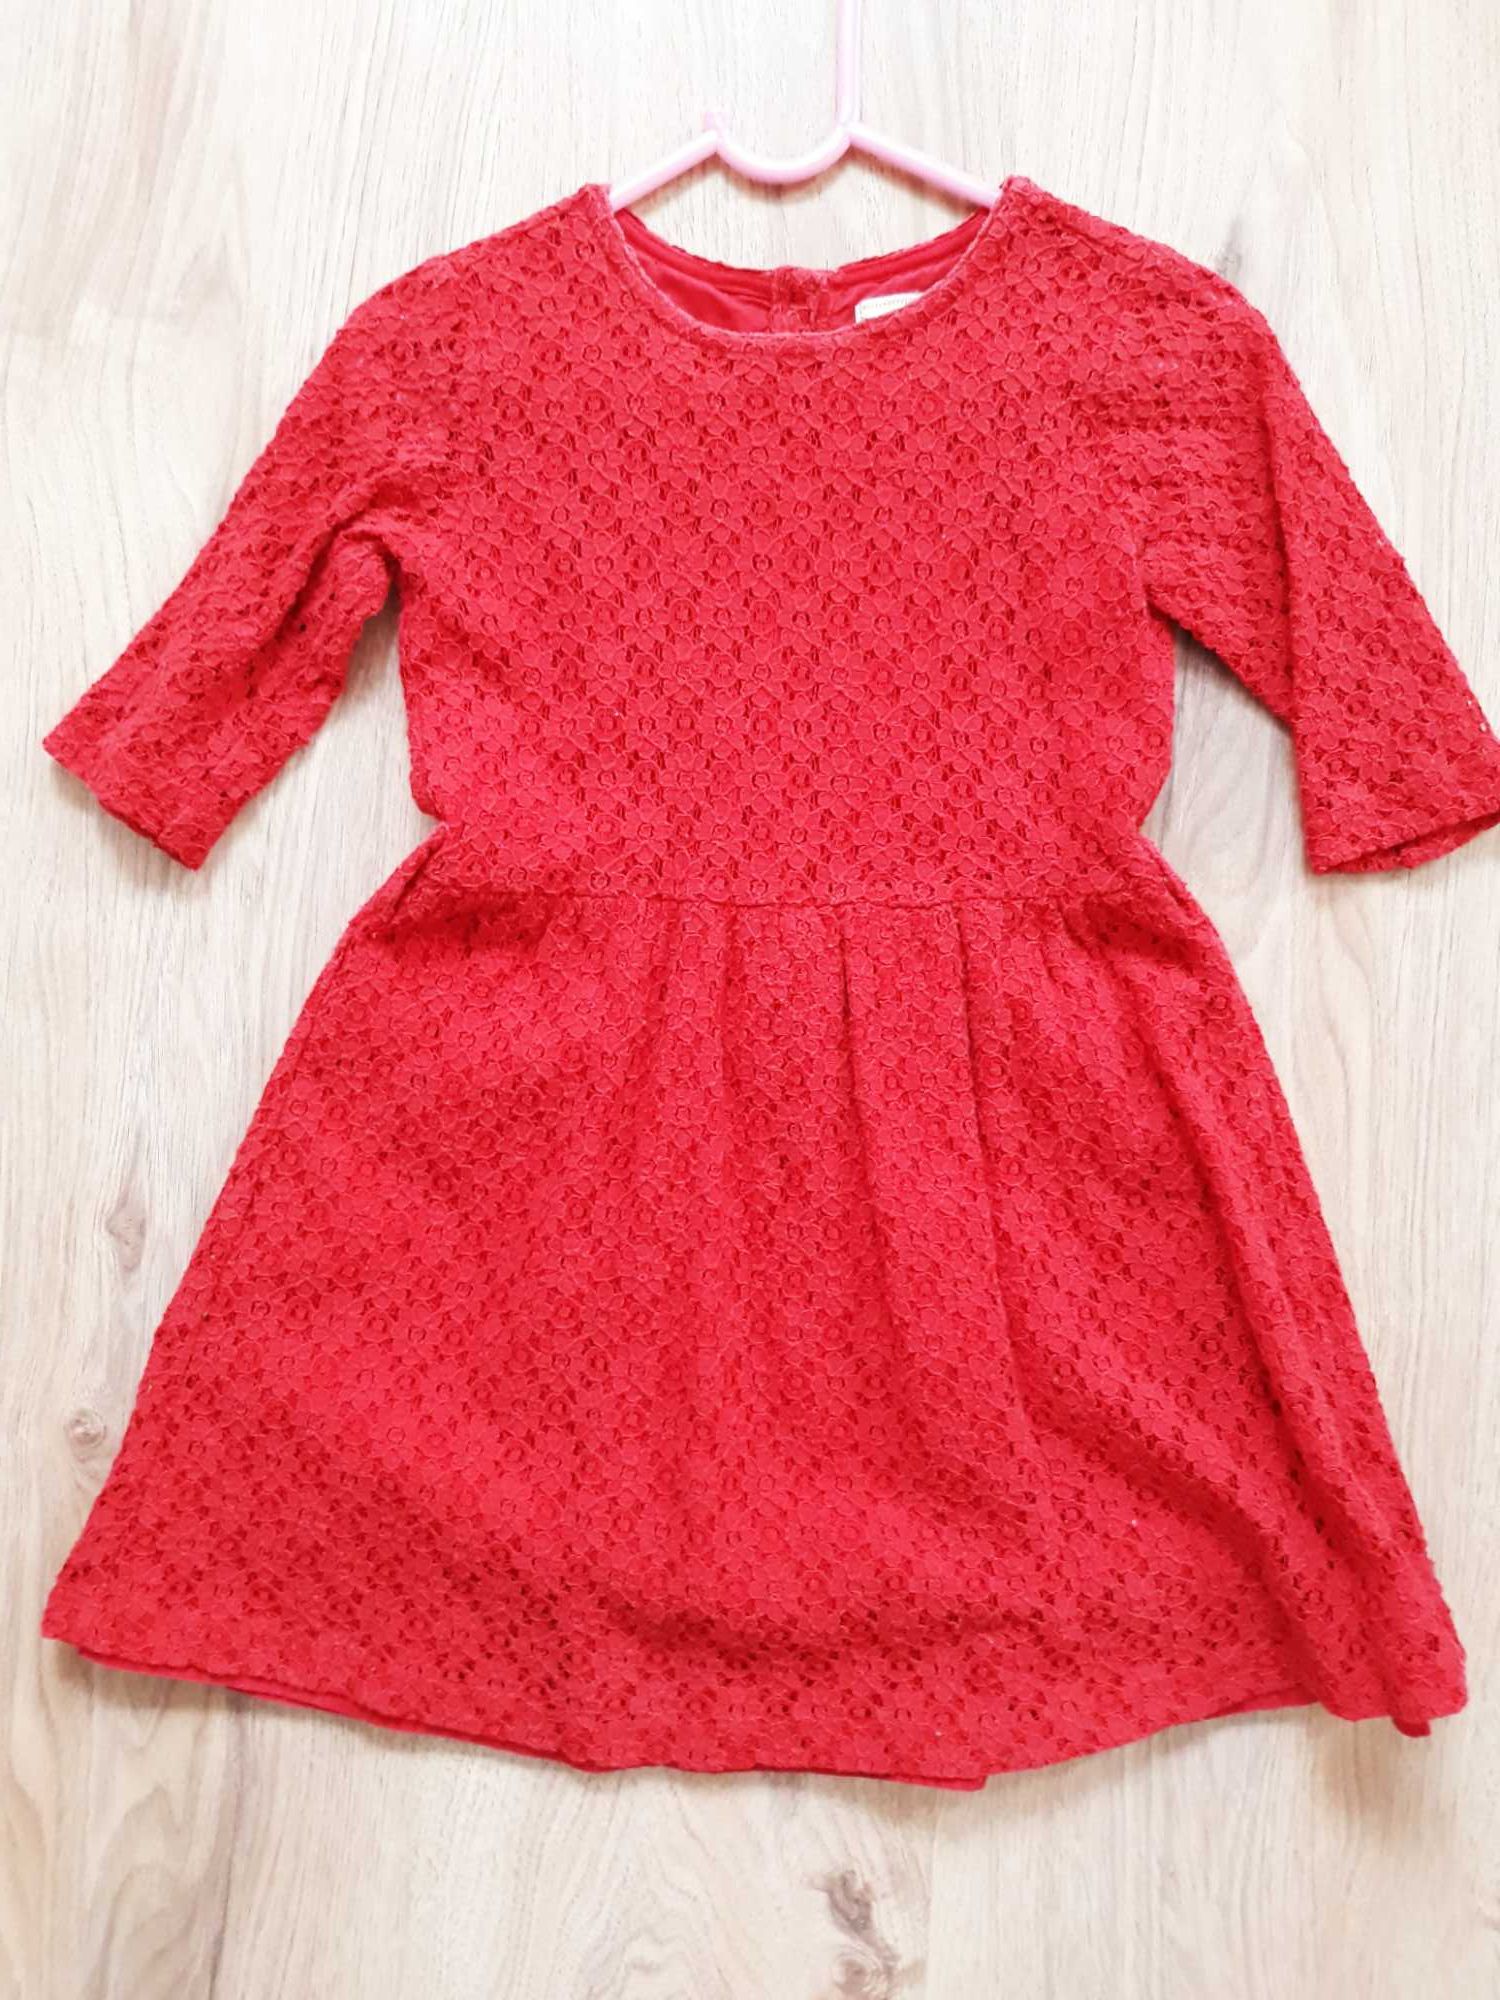 Sukienka czerwona koronkowa 4-5lat,110